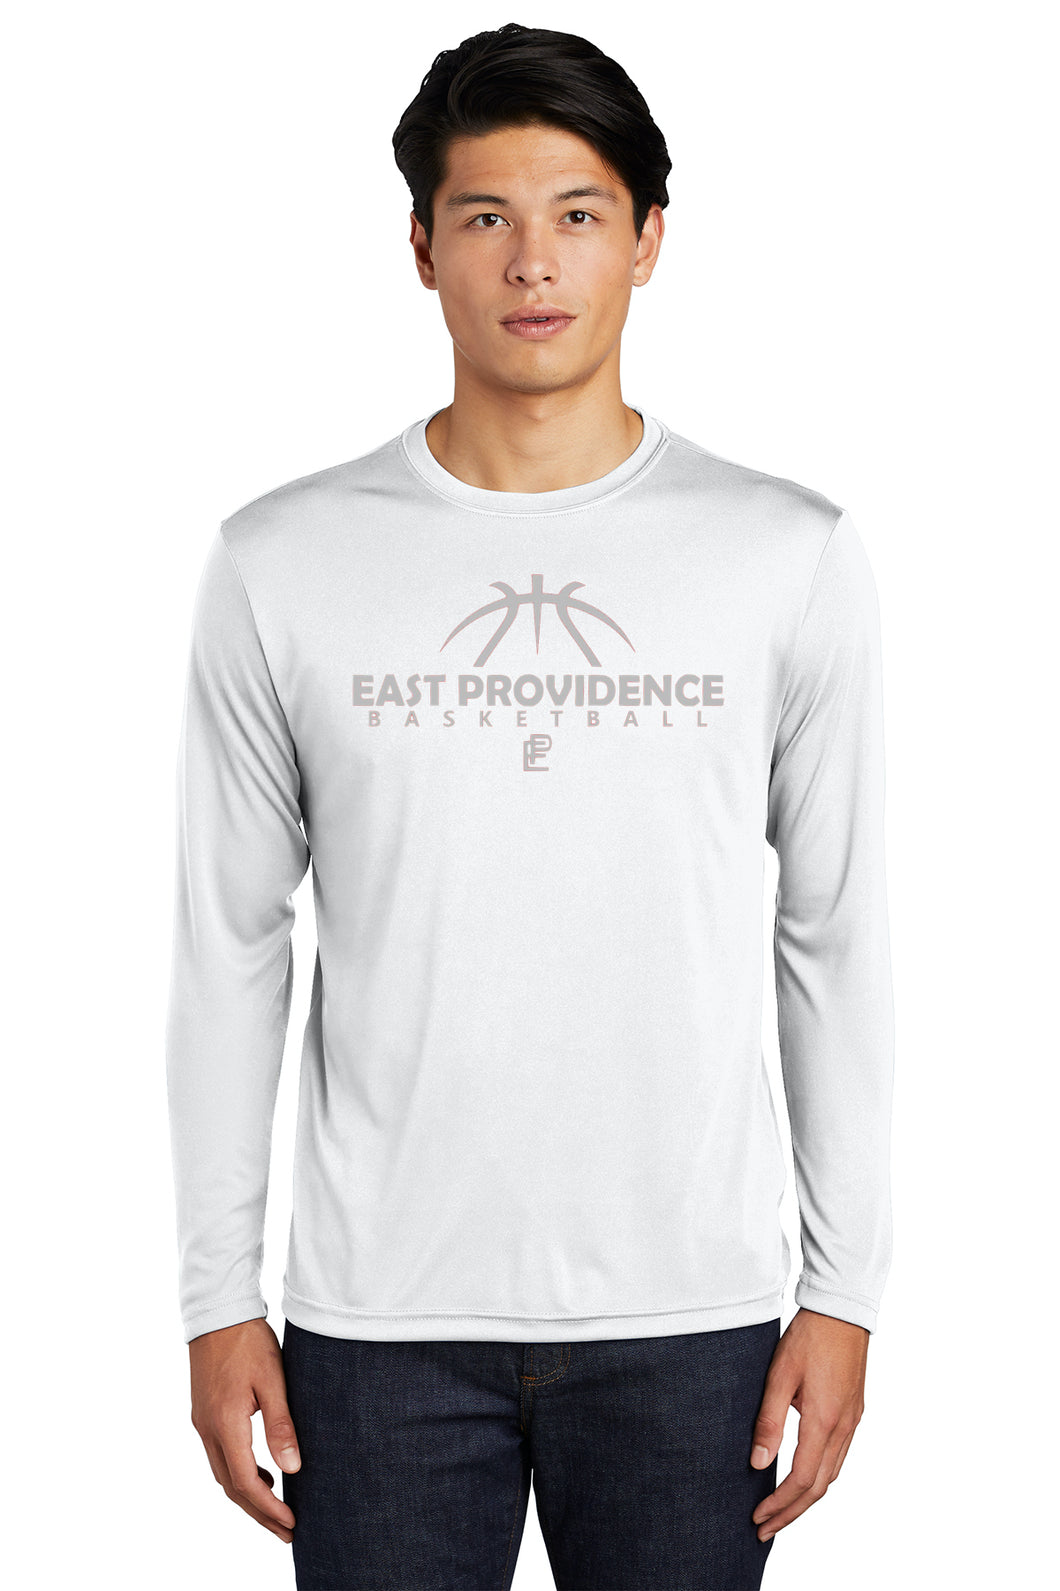 East Providence Basketball Heather White Performance Long Sleeve Grey Print